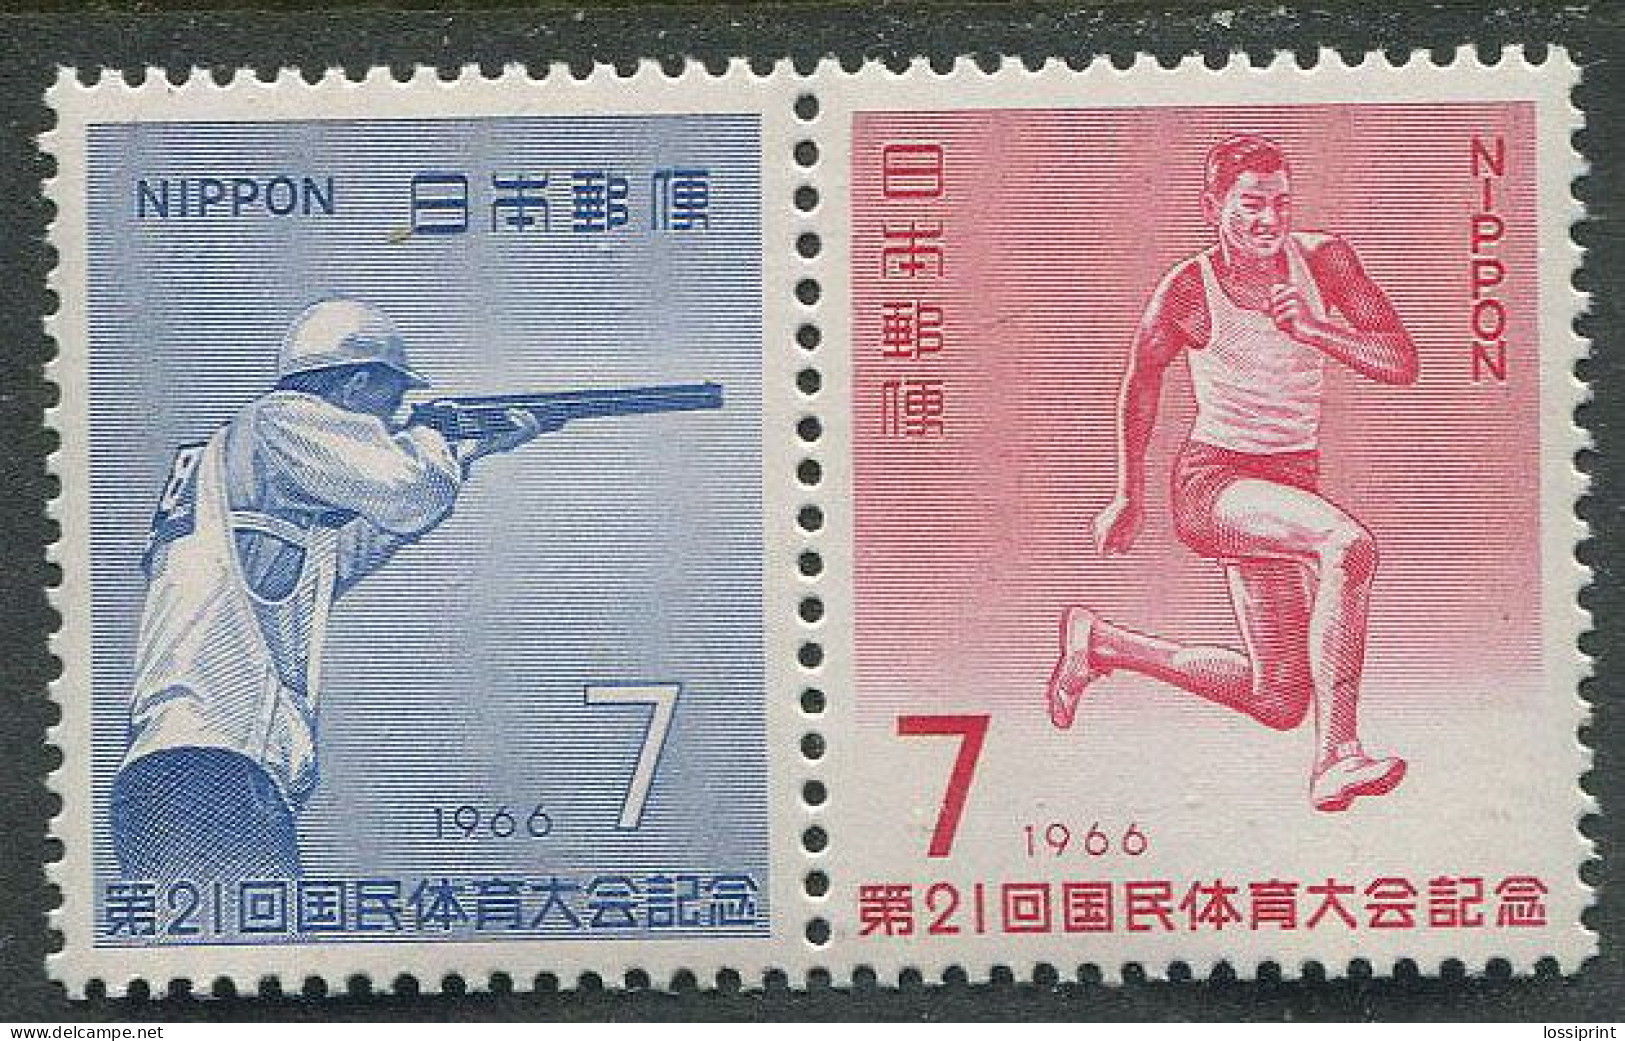 Japan:Unused Stamps Shooting And Running, 1966, MNH - Tir (Armes)